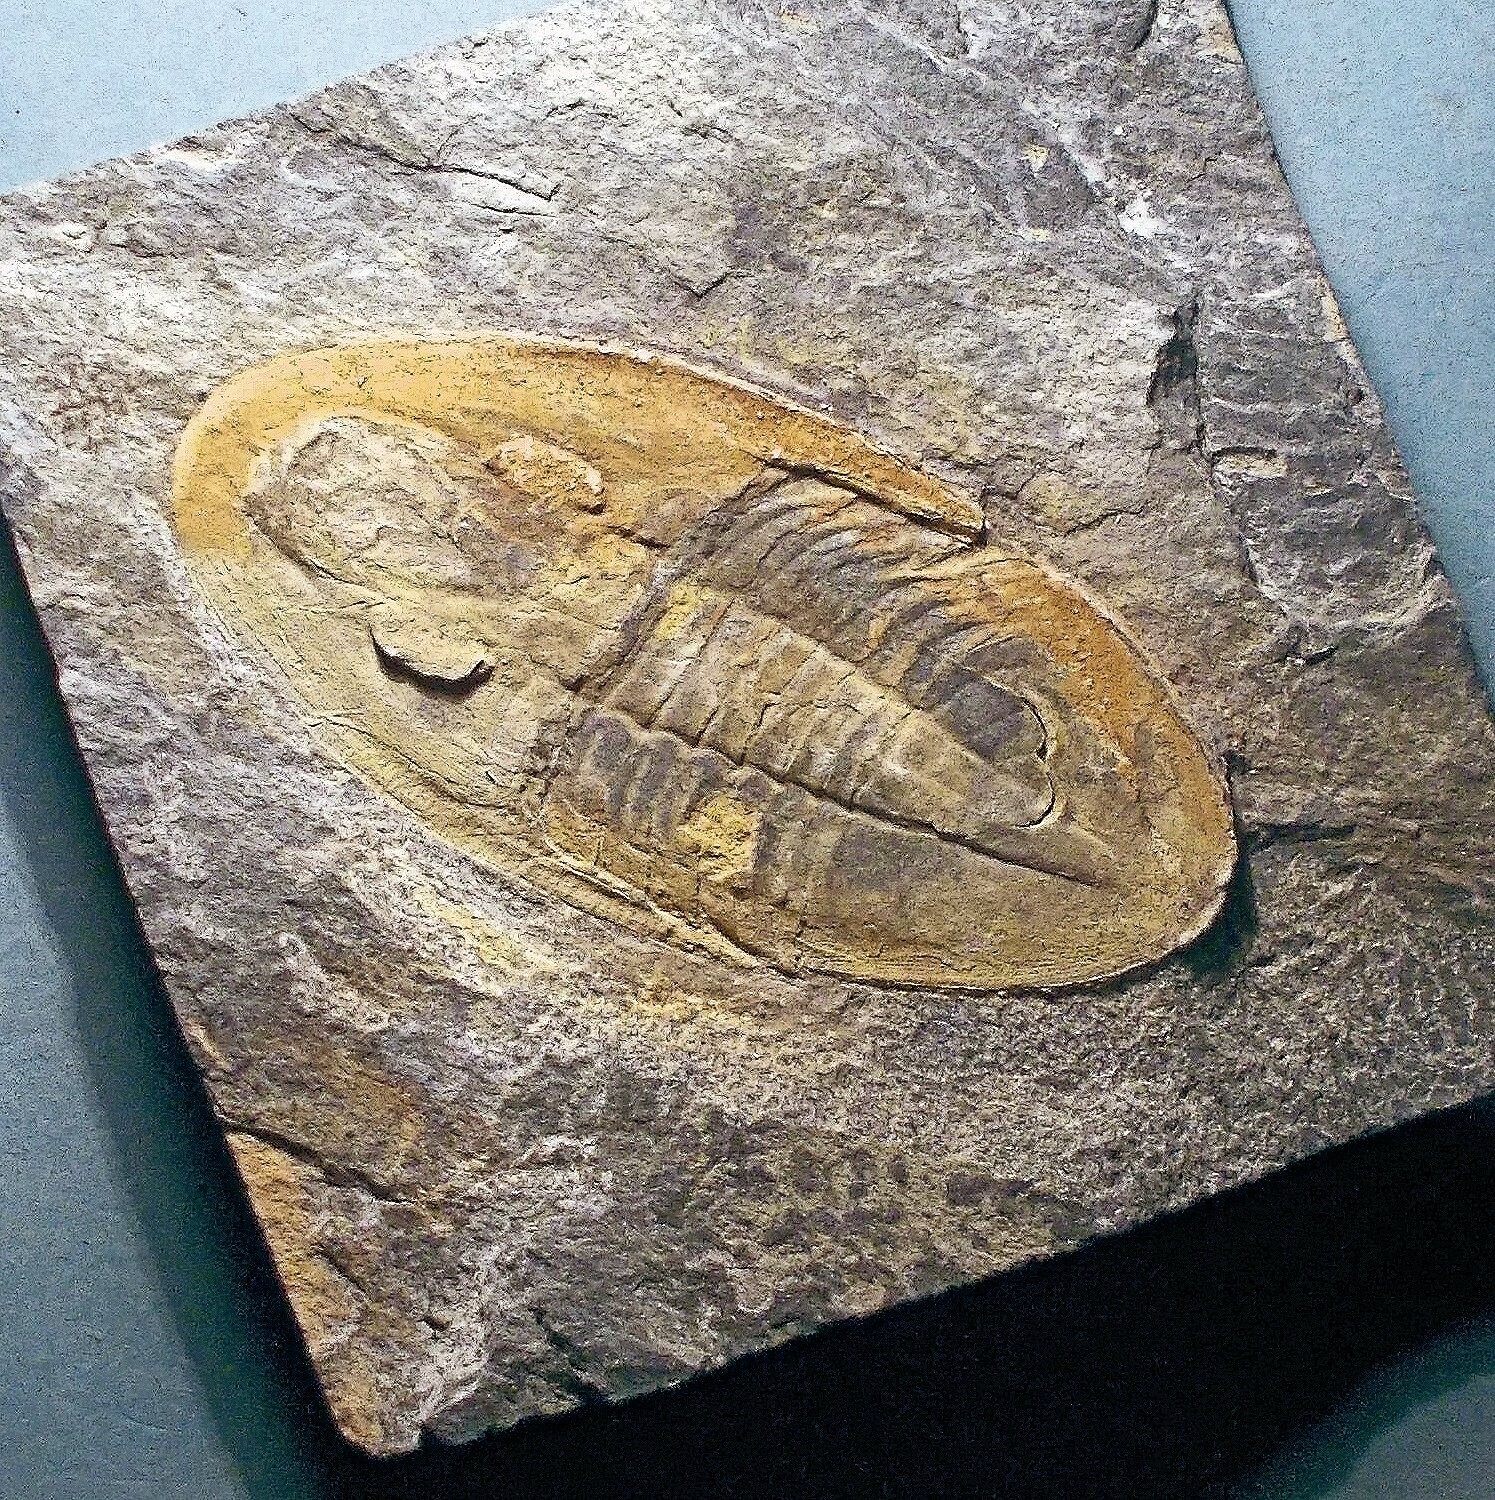 Fine 8.5cm complete Isabellina glabrata with librigena; Ordovician, Llanvirn Series, Valong Formation, Portugal.